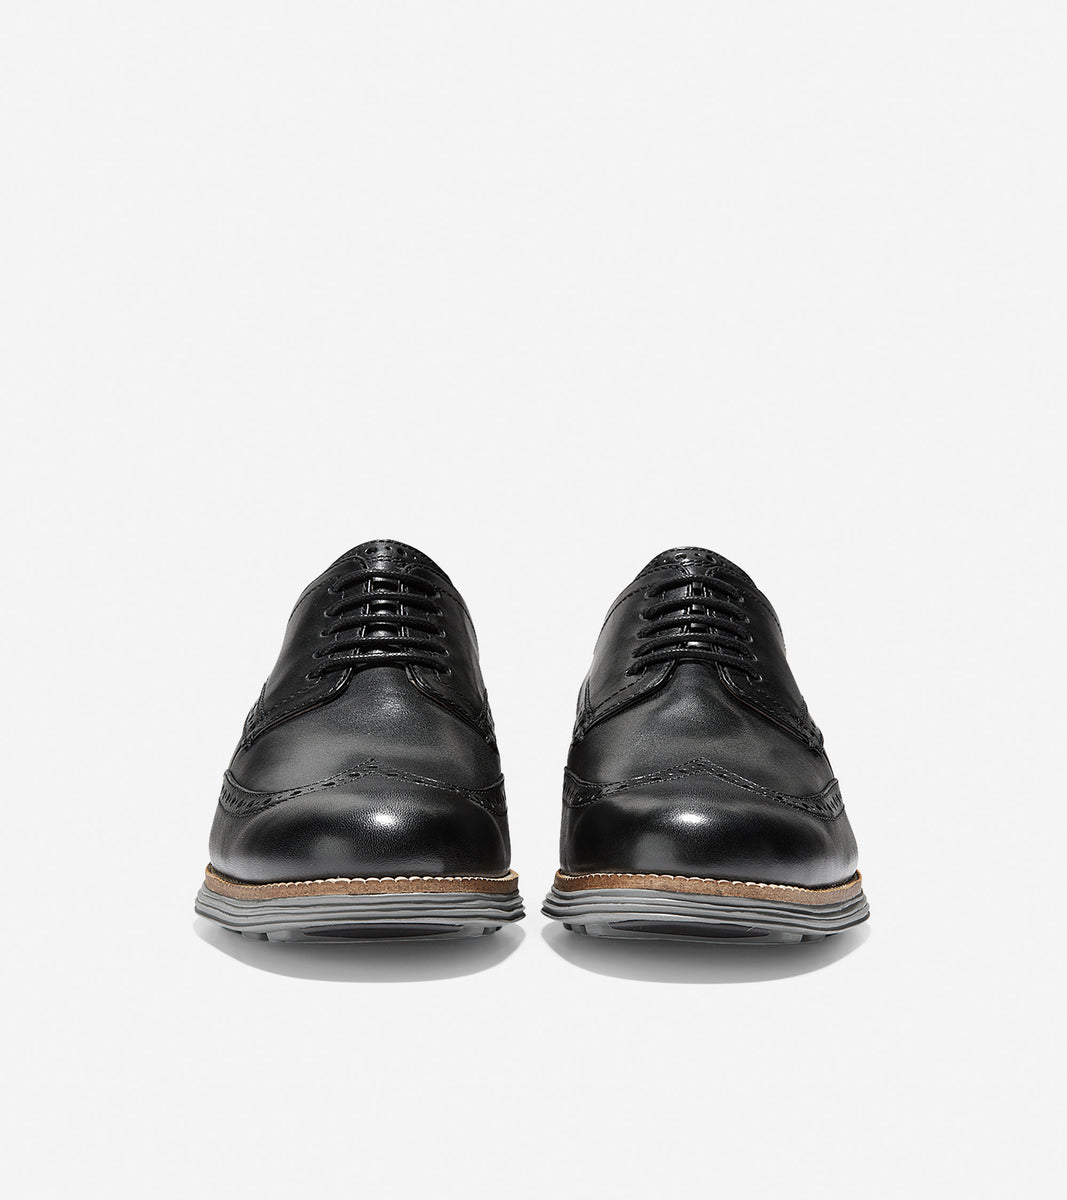 ColeHaan-ØriginalGrand Wingtip Oxford-c26470-Black Leather-ironstone